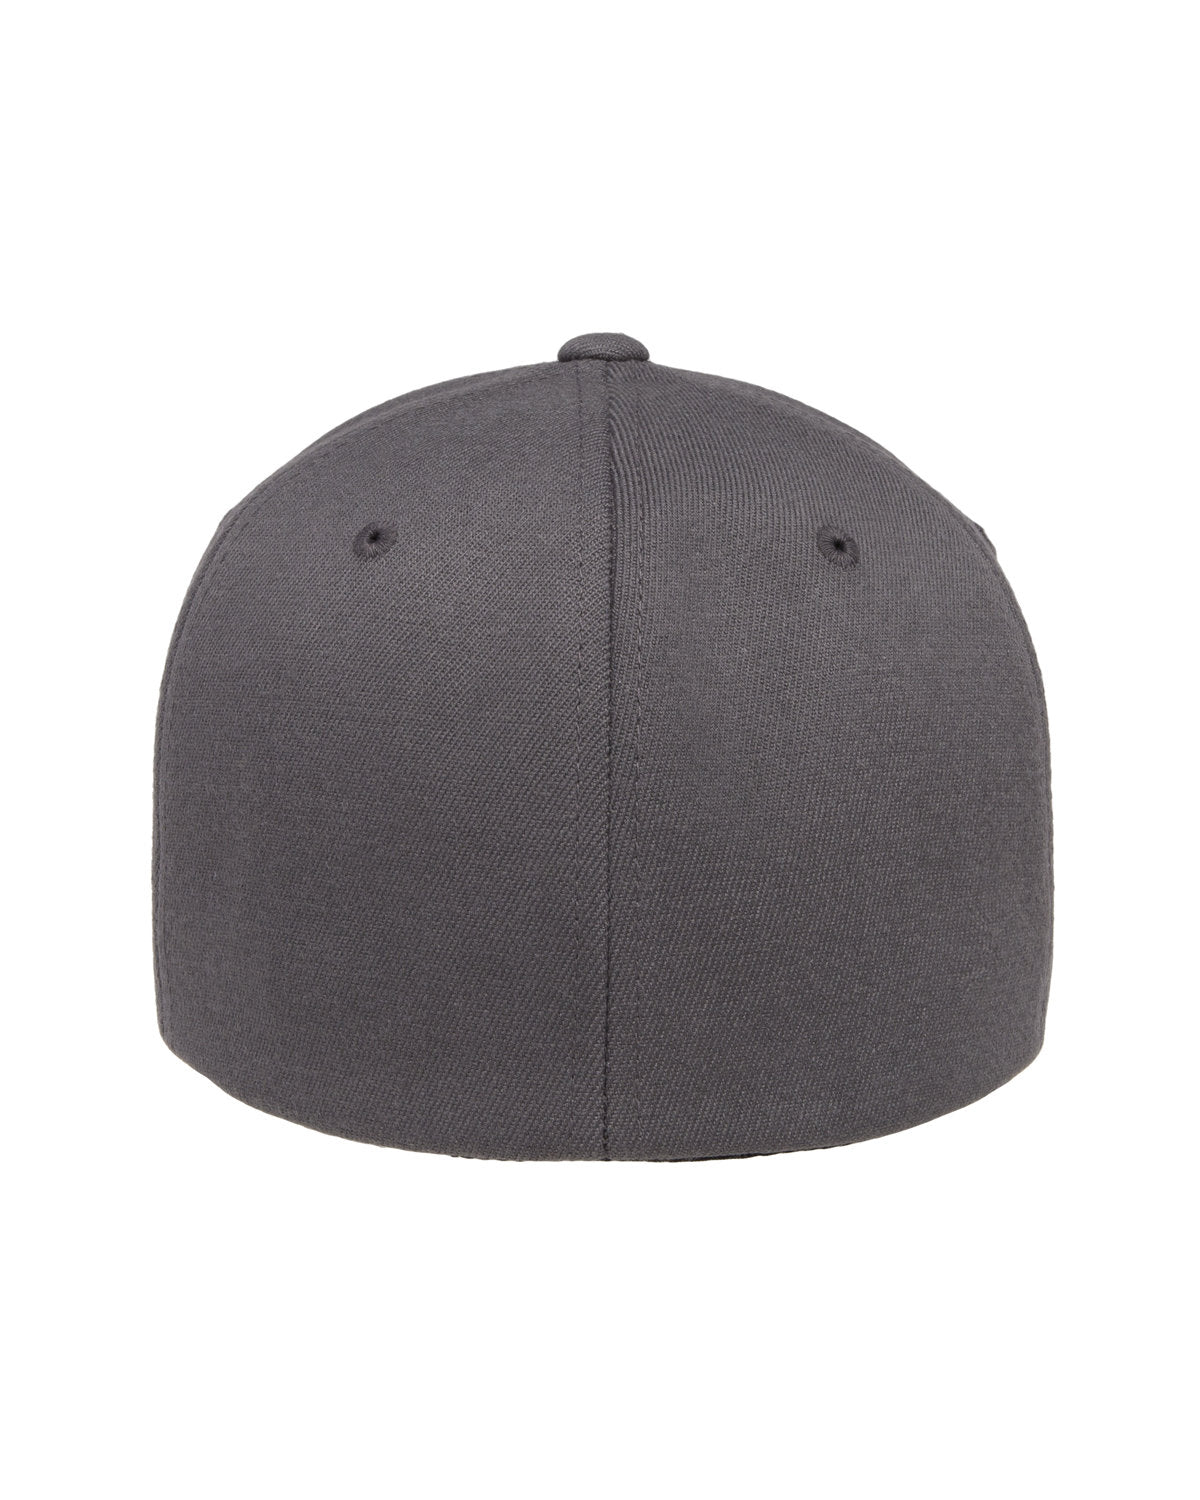 Flexfit Wool Blend Grey Caps, Branded